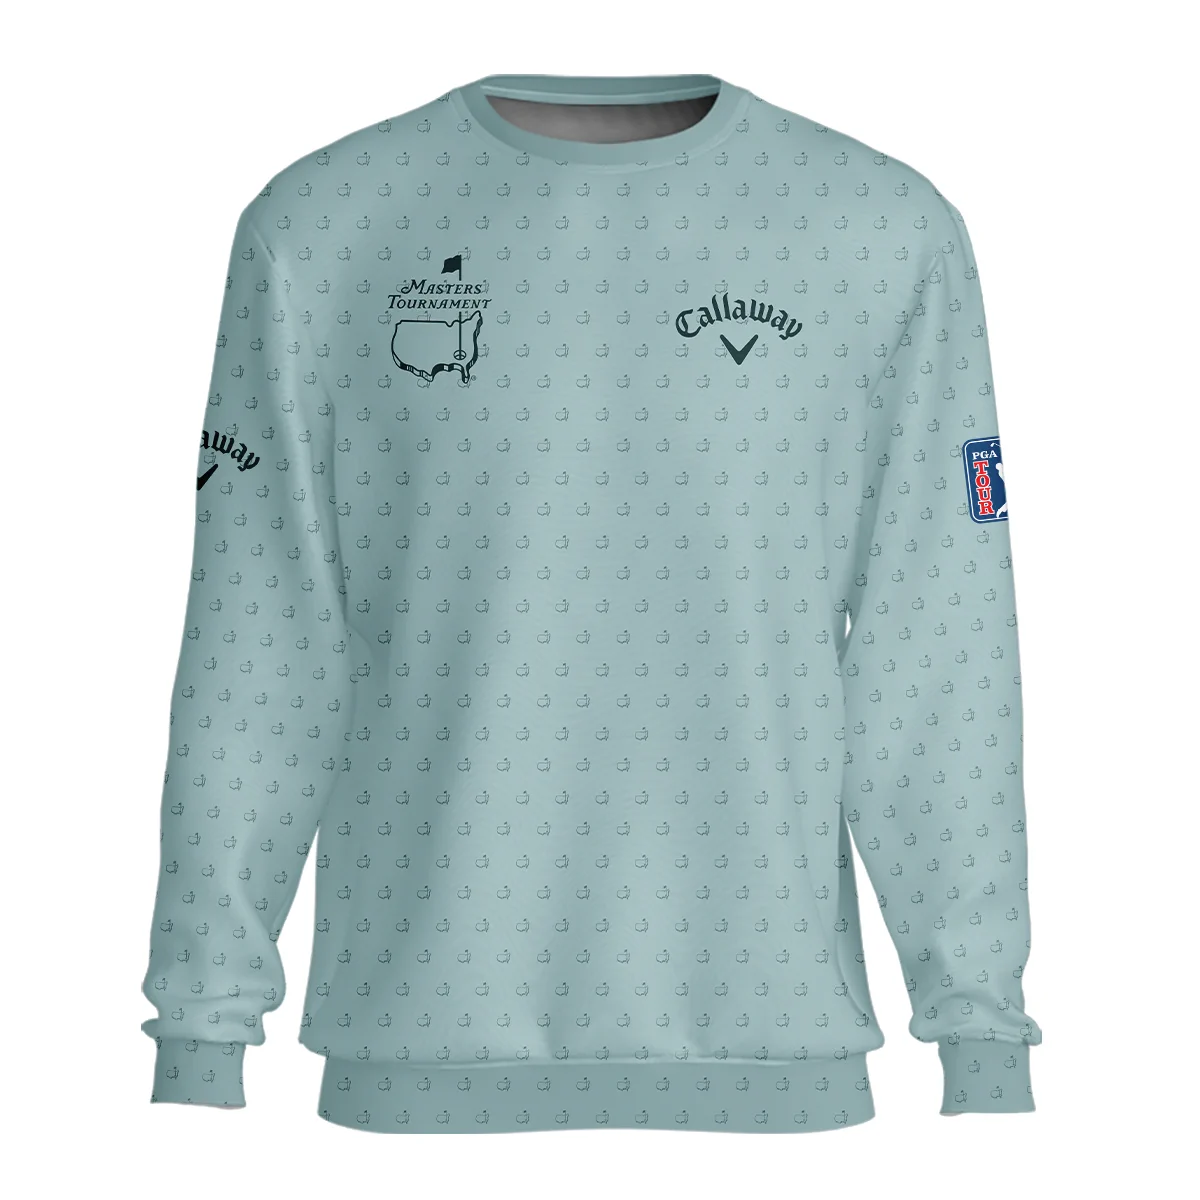 Golf Pattern Masters Tournament Callaway Unisex Sweatshirt Cyan Pattern All Over Print Sweatshirt